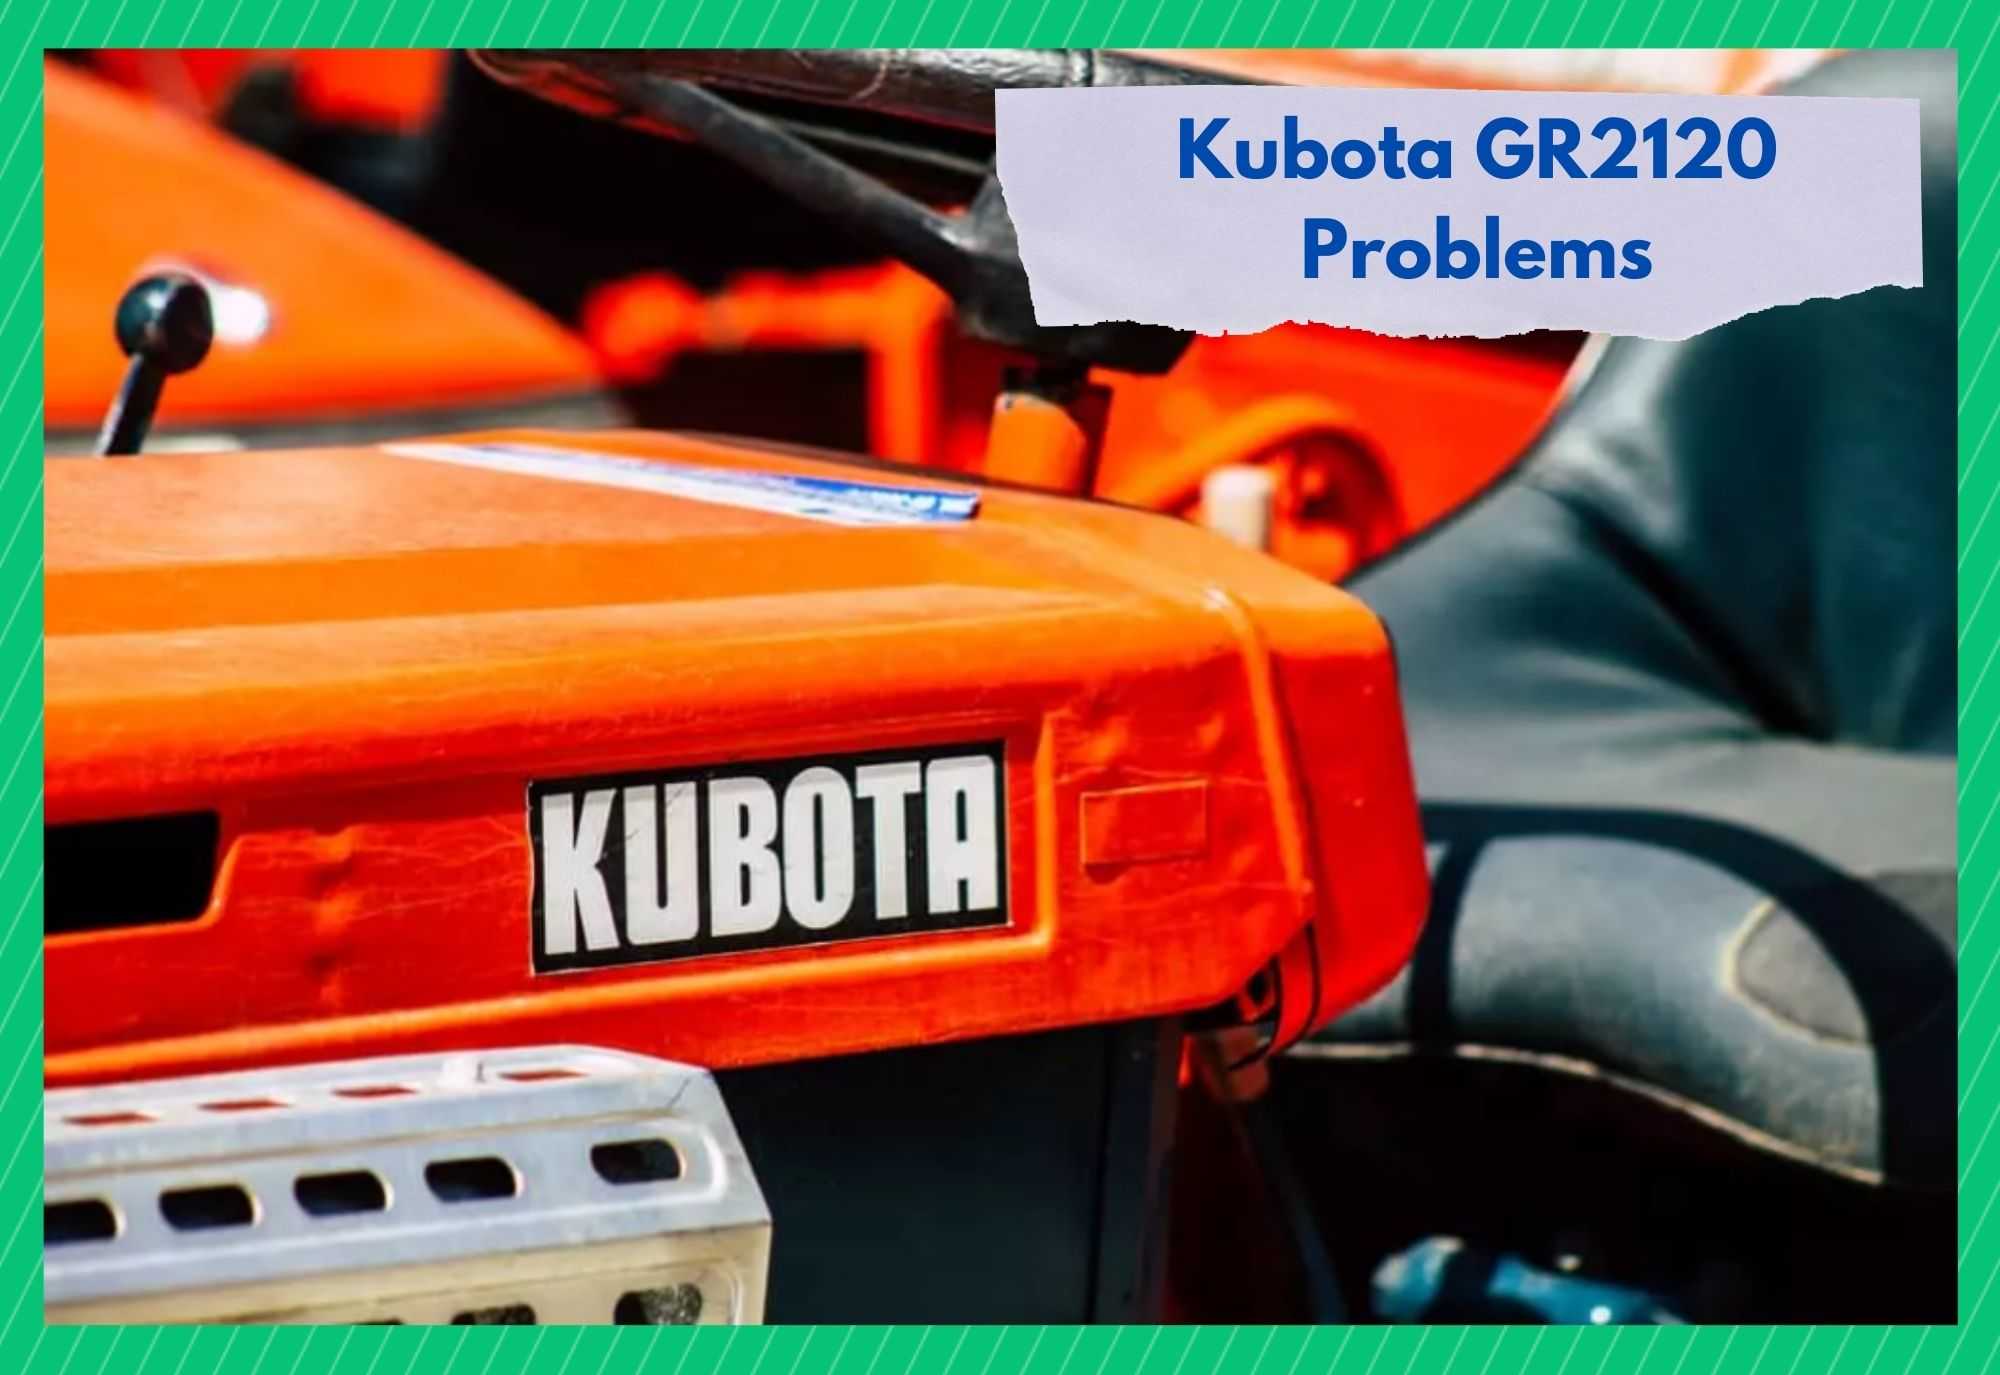 kubota gr2120 problems